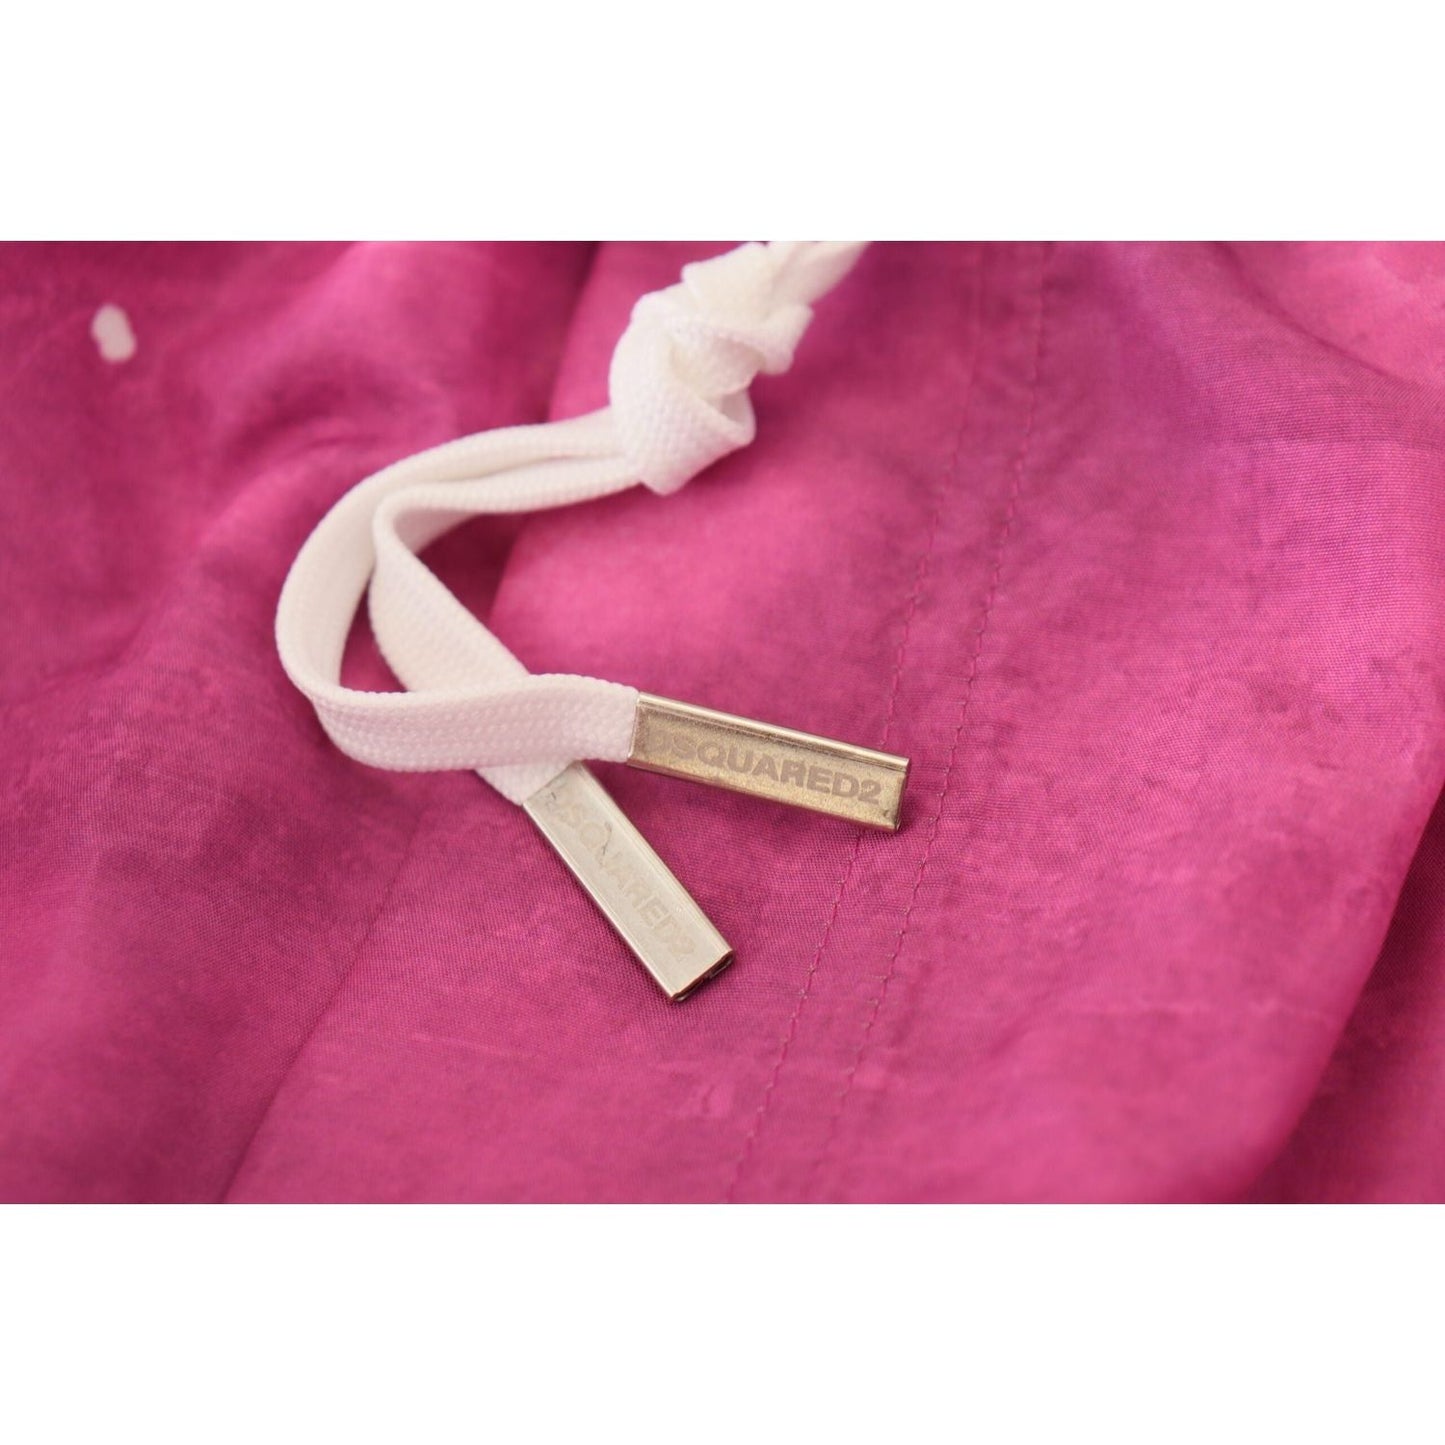 Dsquared² Pink Tie Dye Swim Shorts Boxer pink-tie-dye-logo-men-beachwear-shorts-swimwear